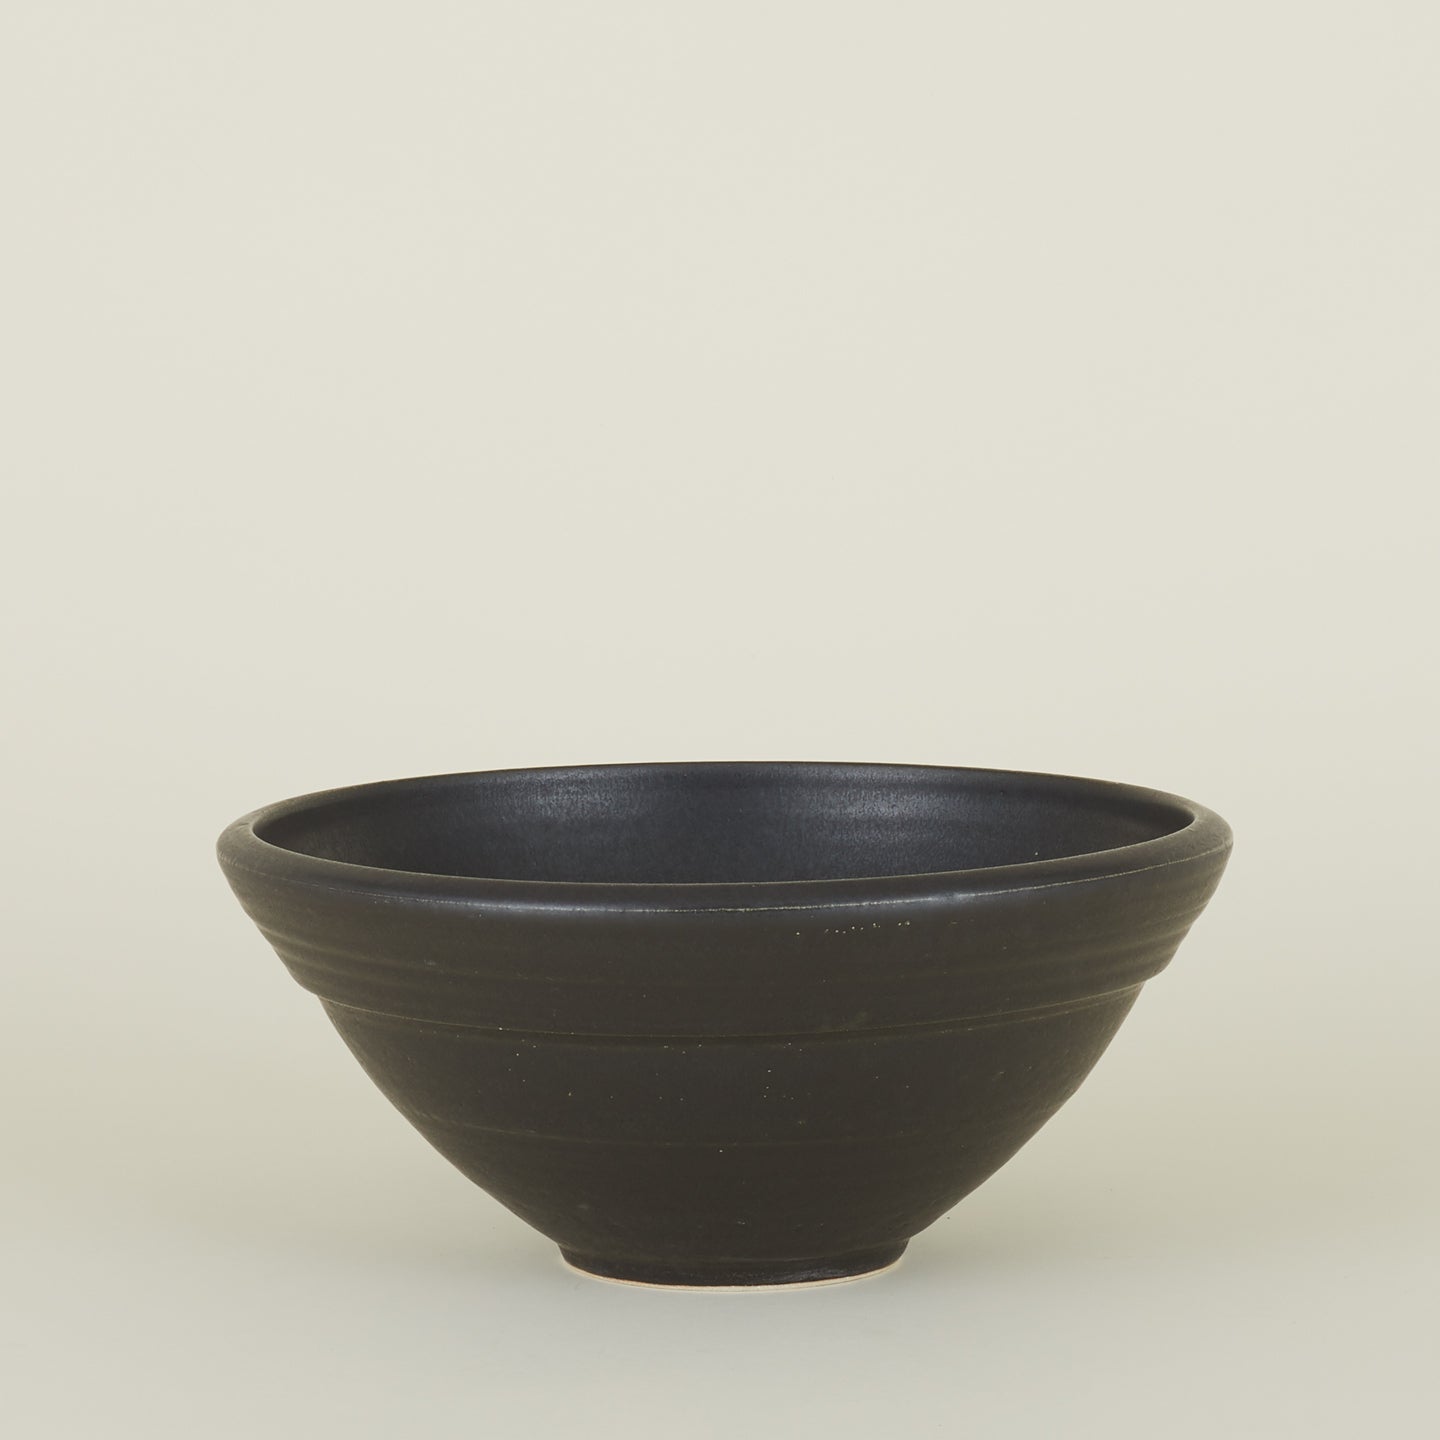 Stoneware Serving Bowl in Black.